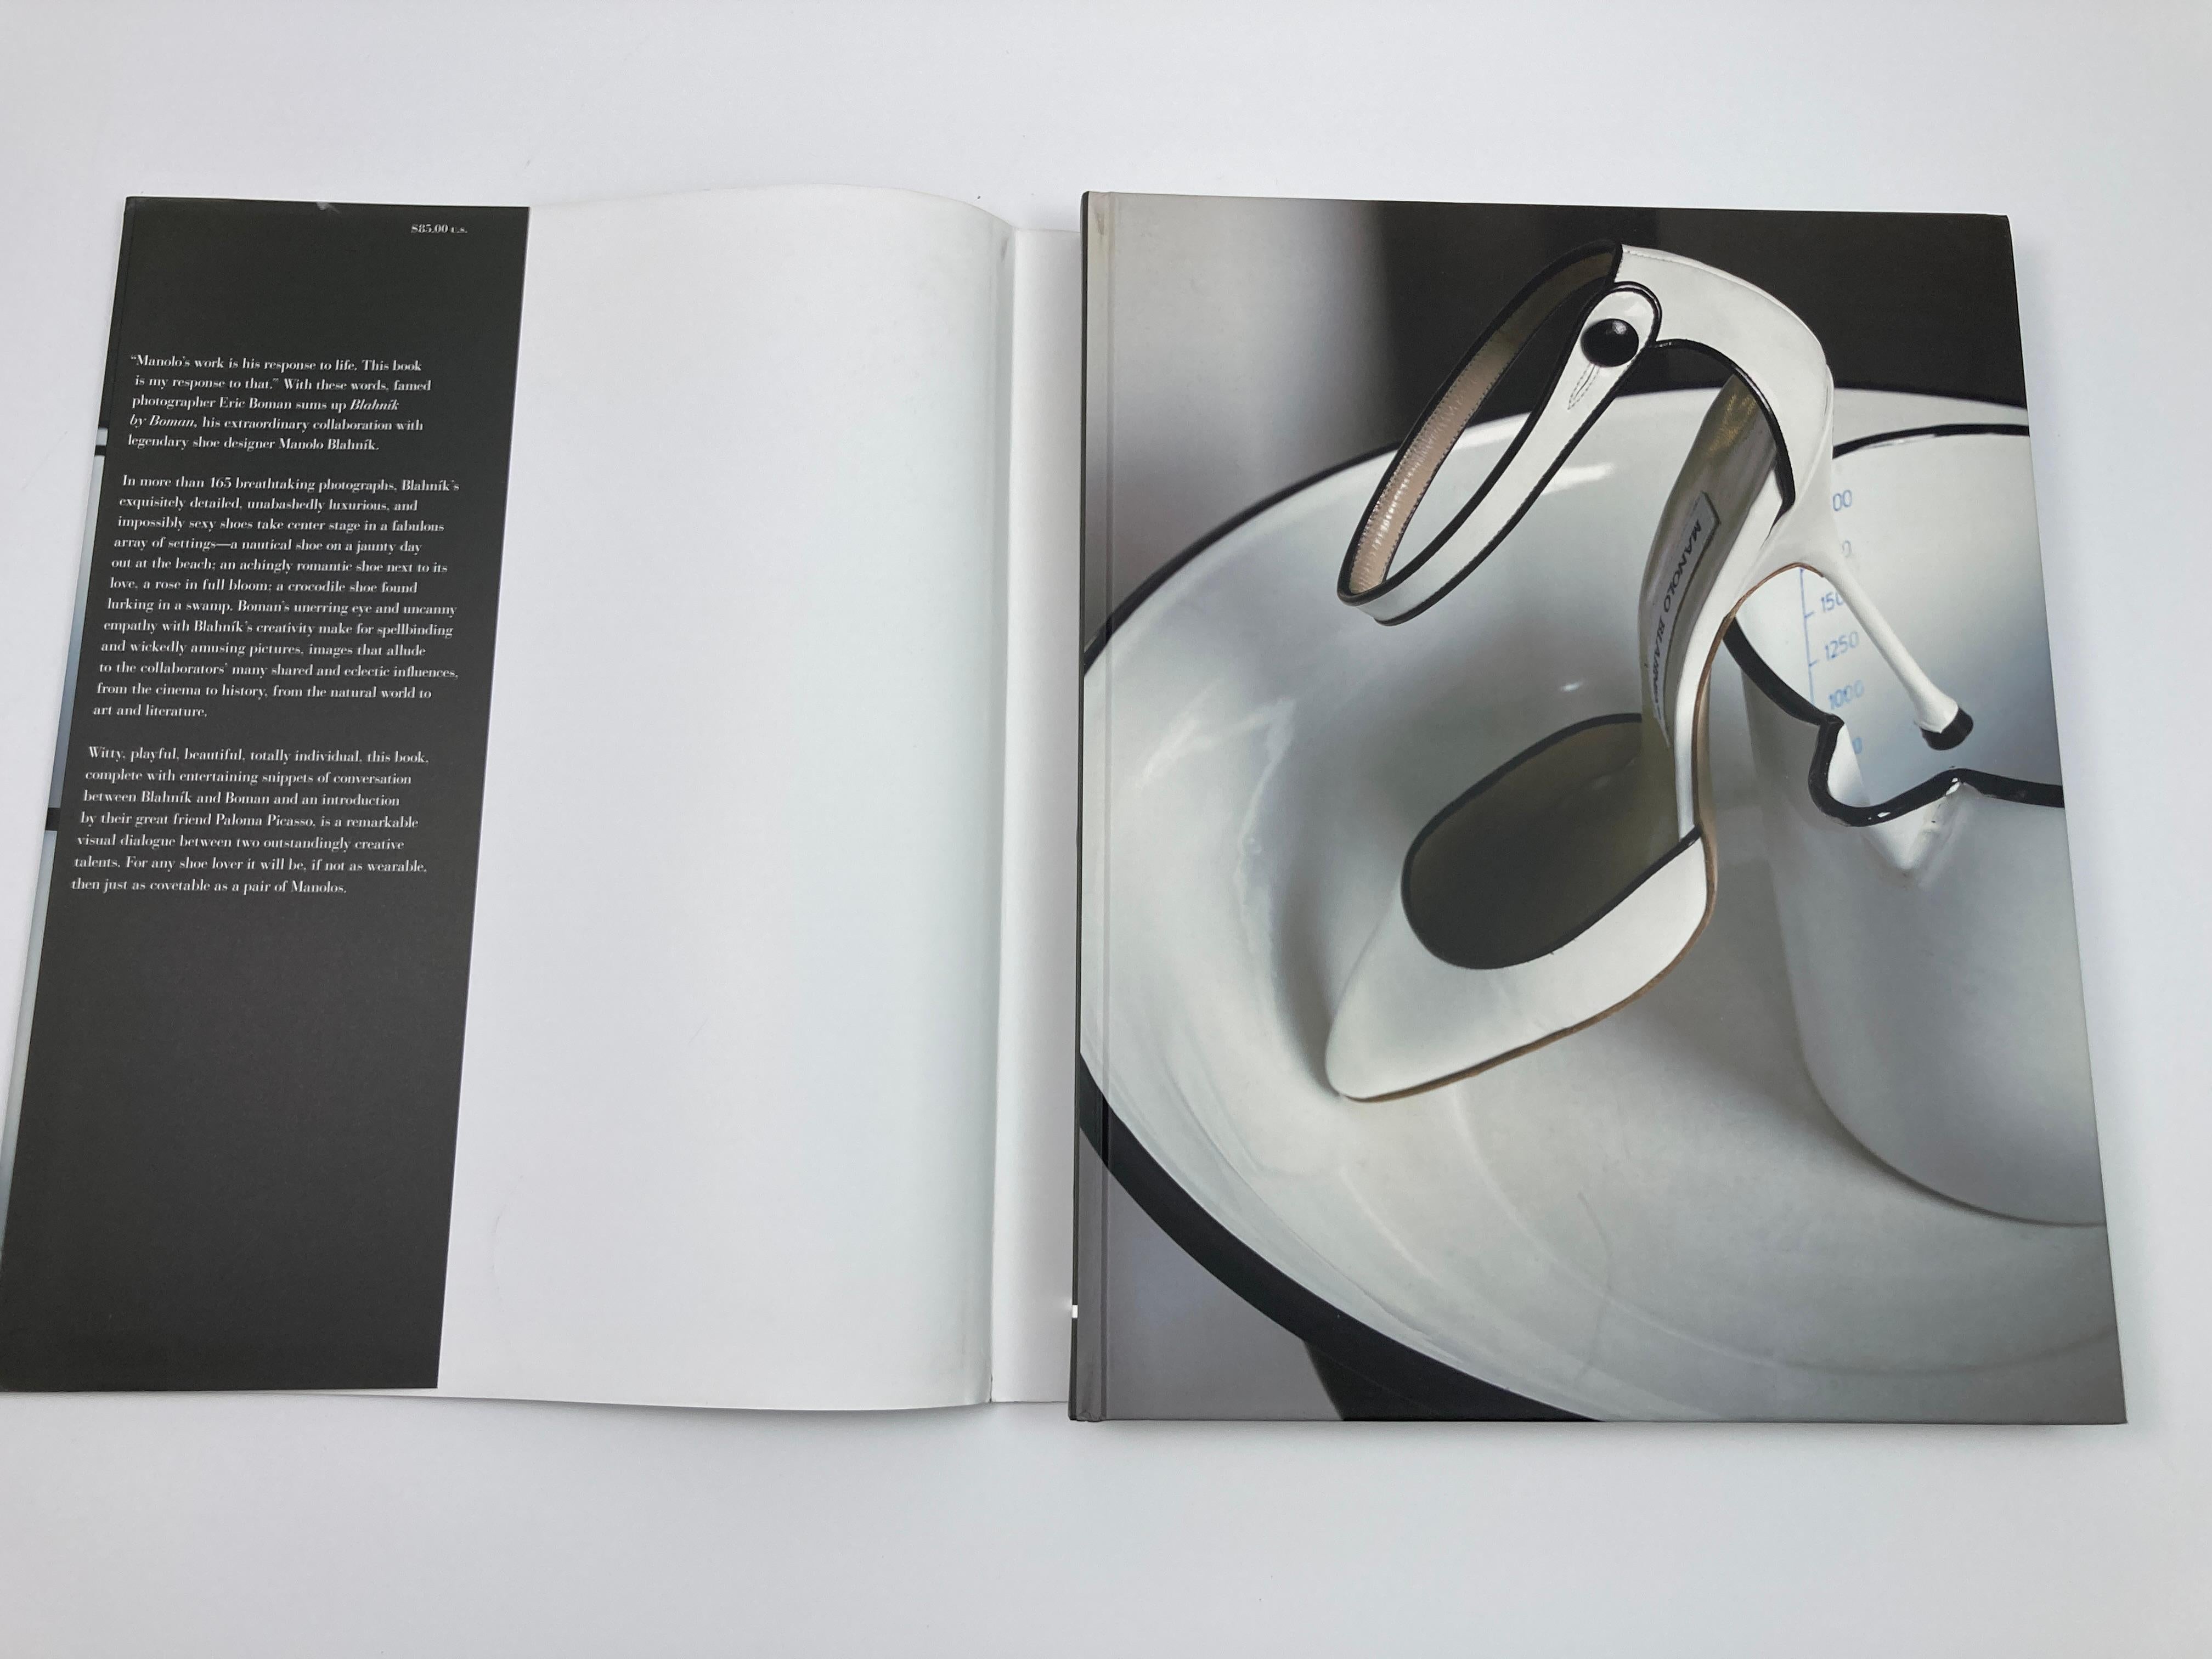 Blahnik by Boman: Shoes, Photographs, ConversationLarge Coffee Table Book 2